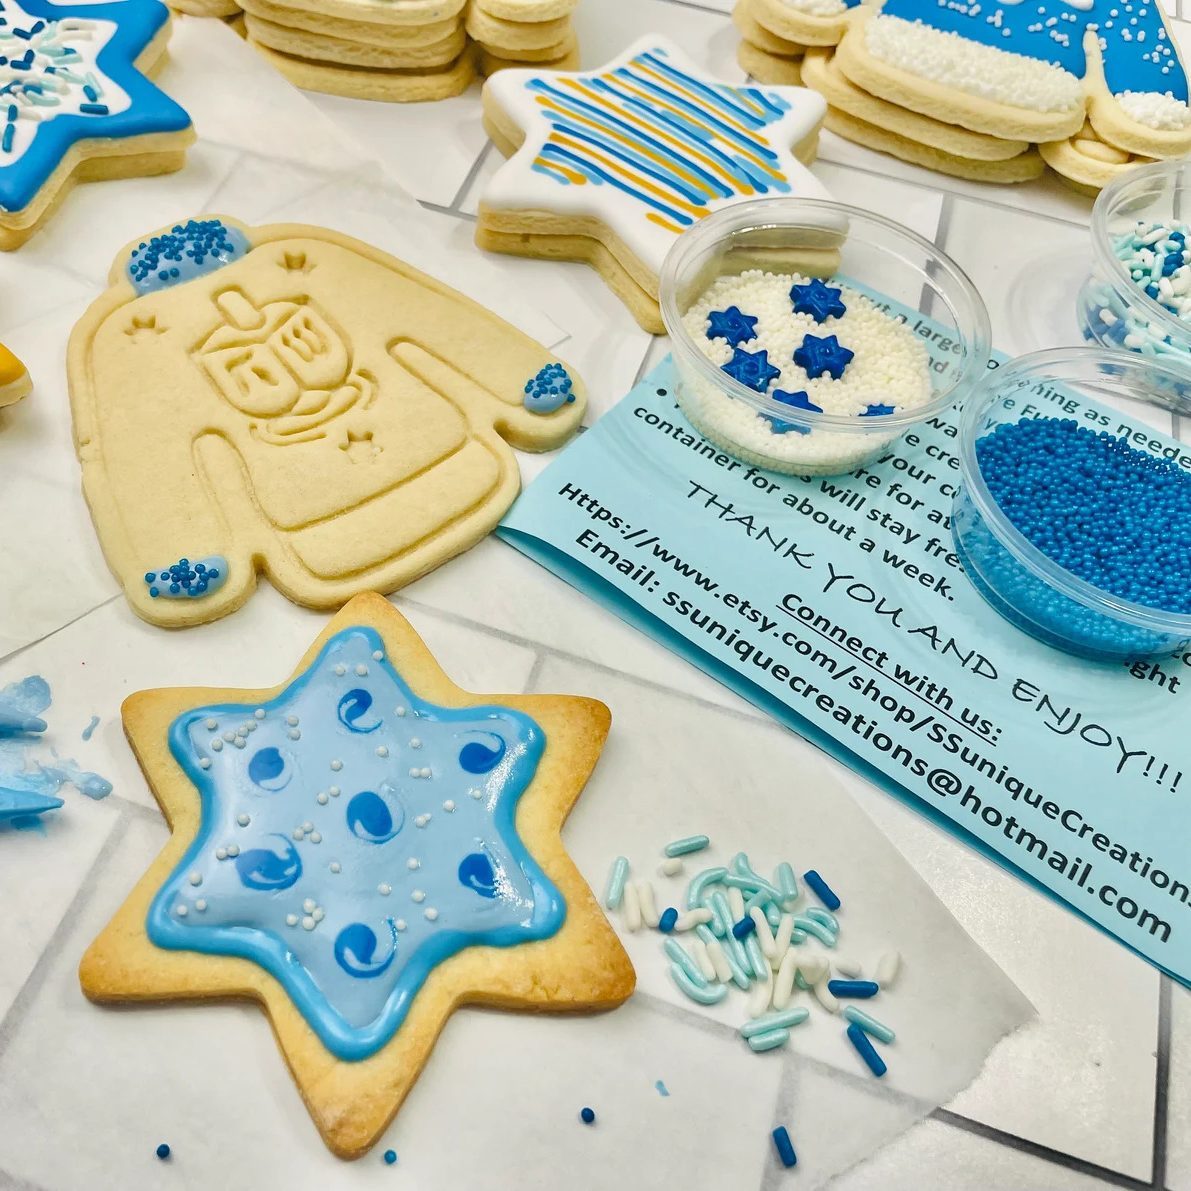 Hanukkah Cookie Decorating Kit Ecomm Via Etsy.com